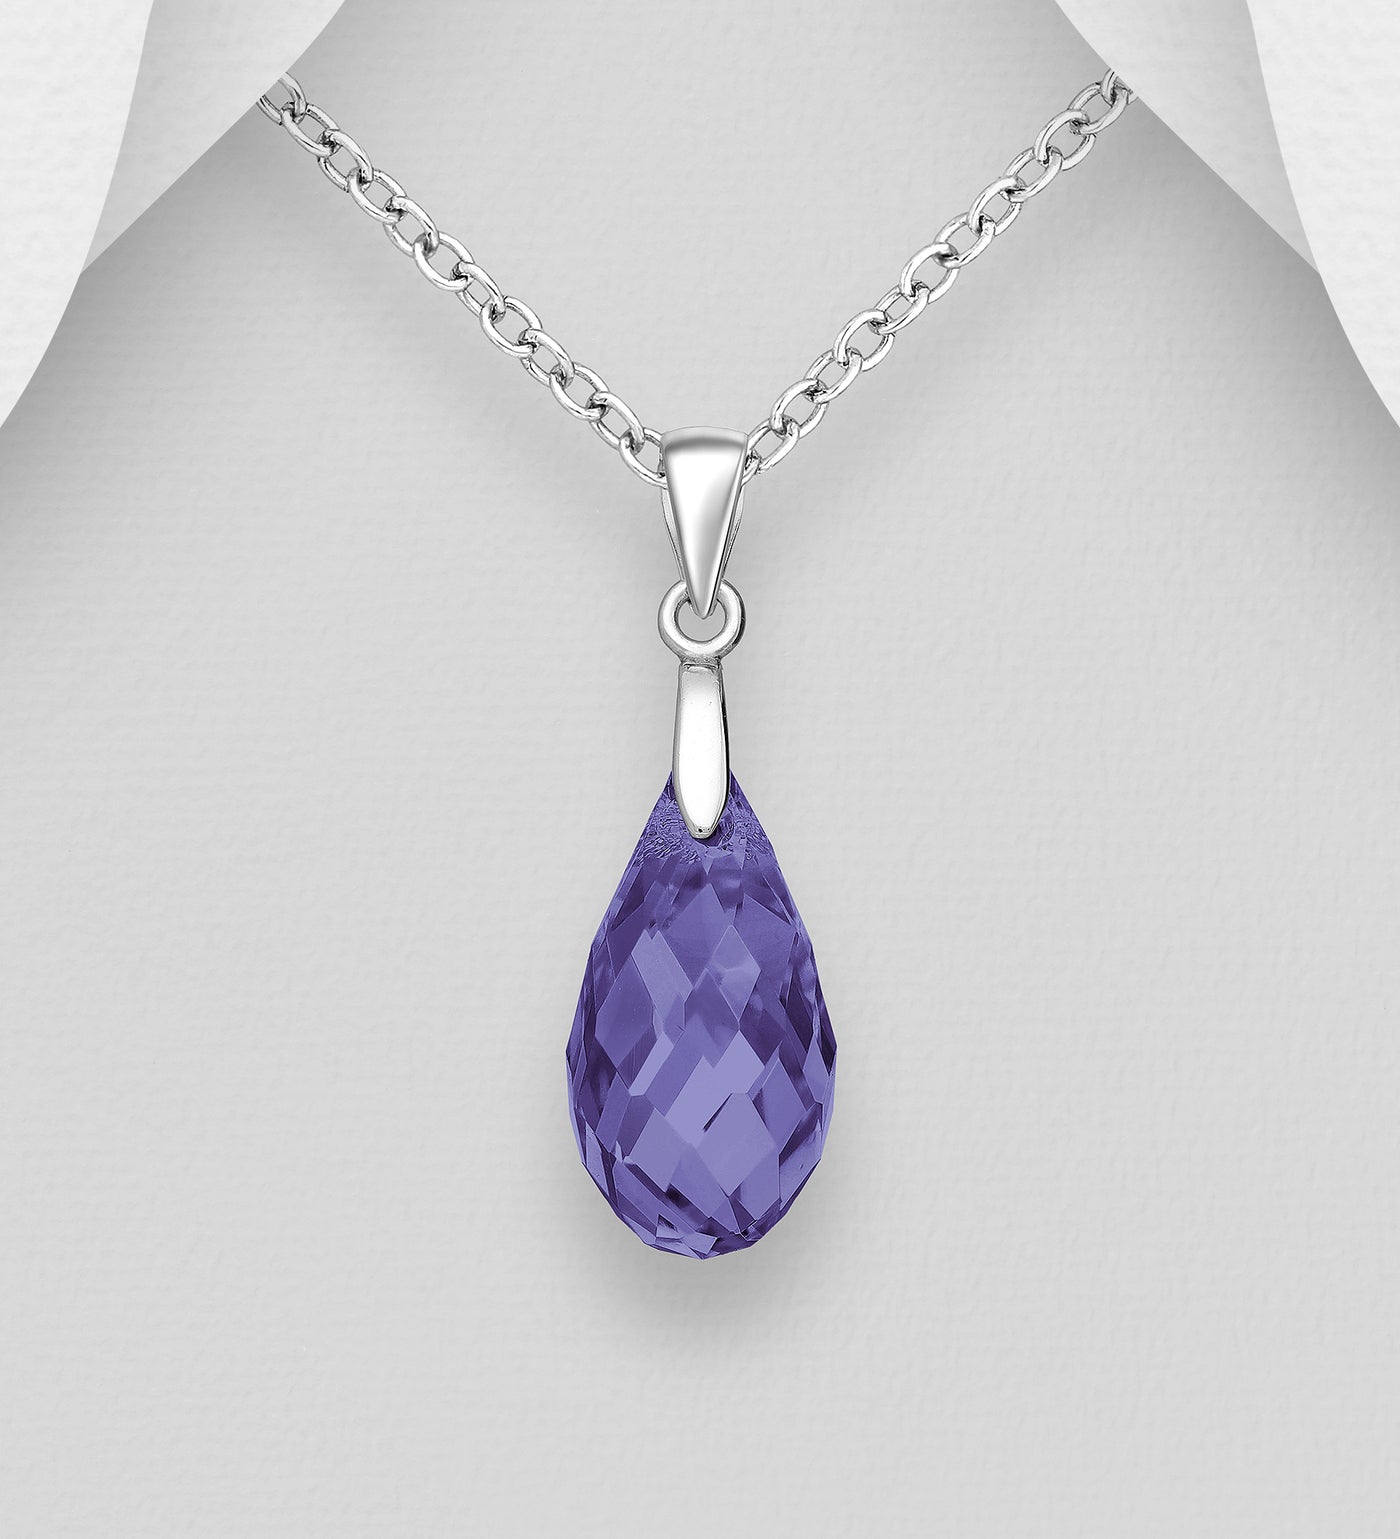 Purple Austrian Crystal Silver Necklace